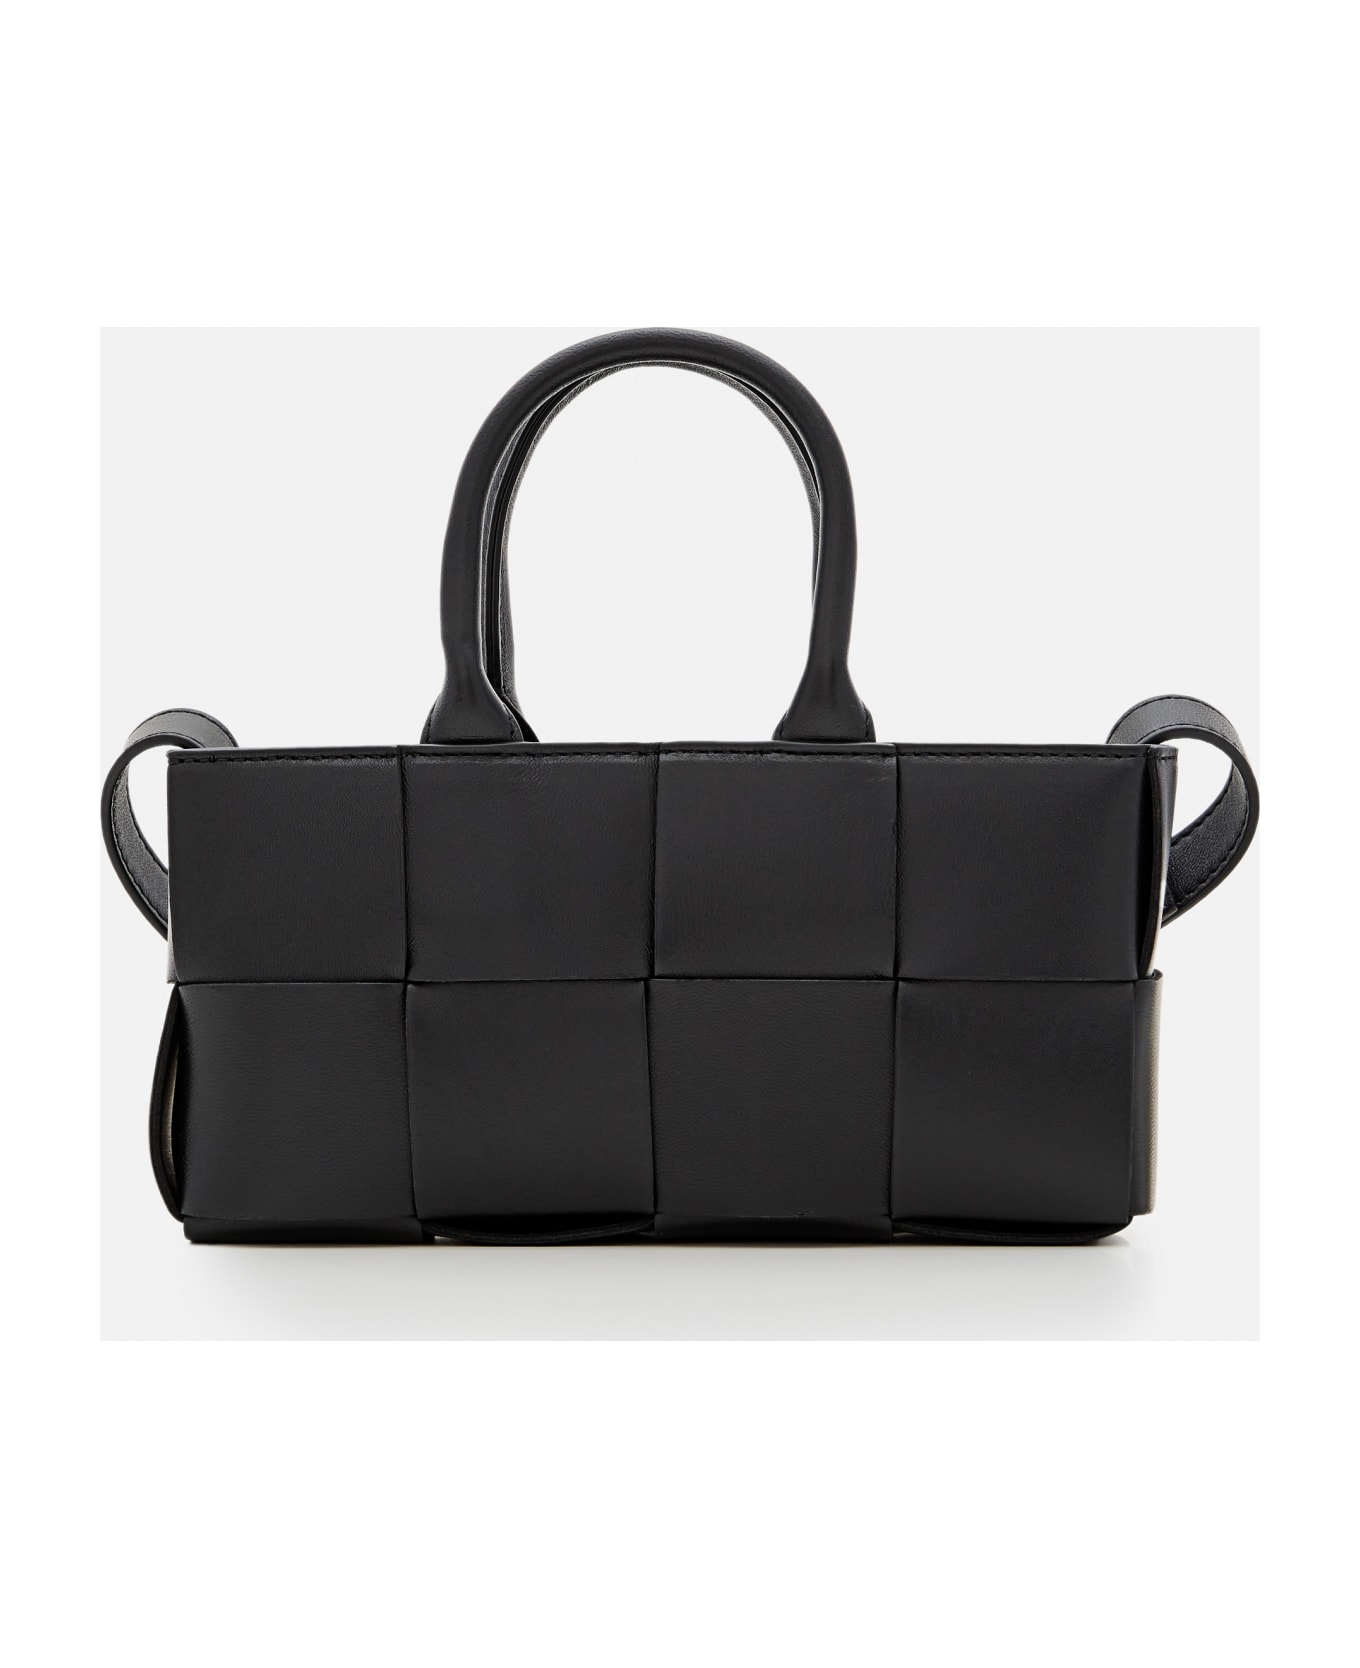 Bottega Veneta East West Mini Arco Leather Tote Bag - Black